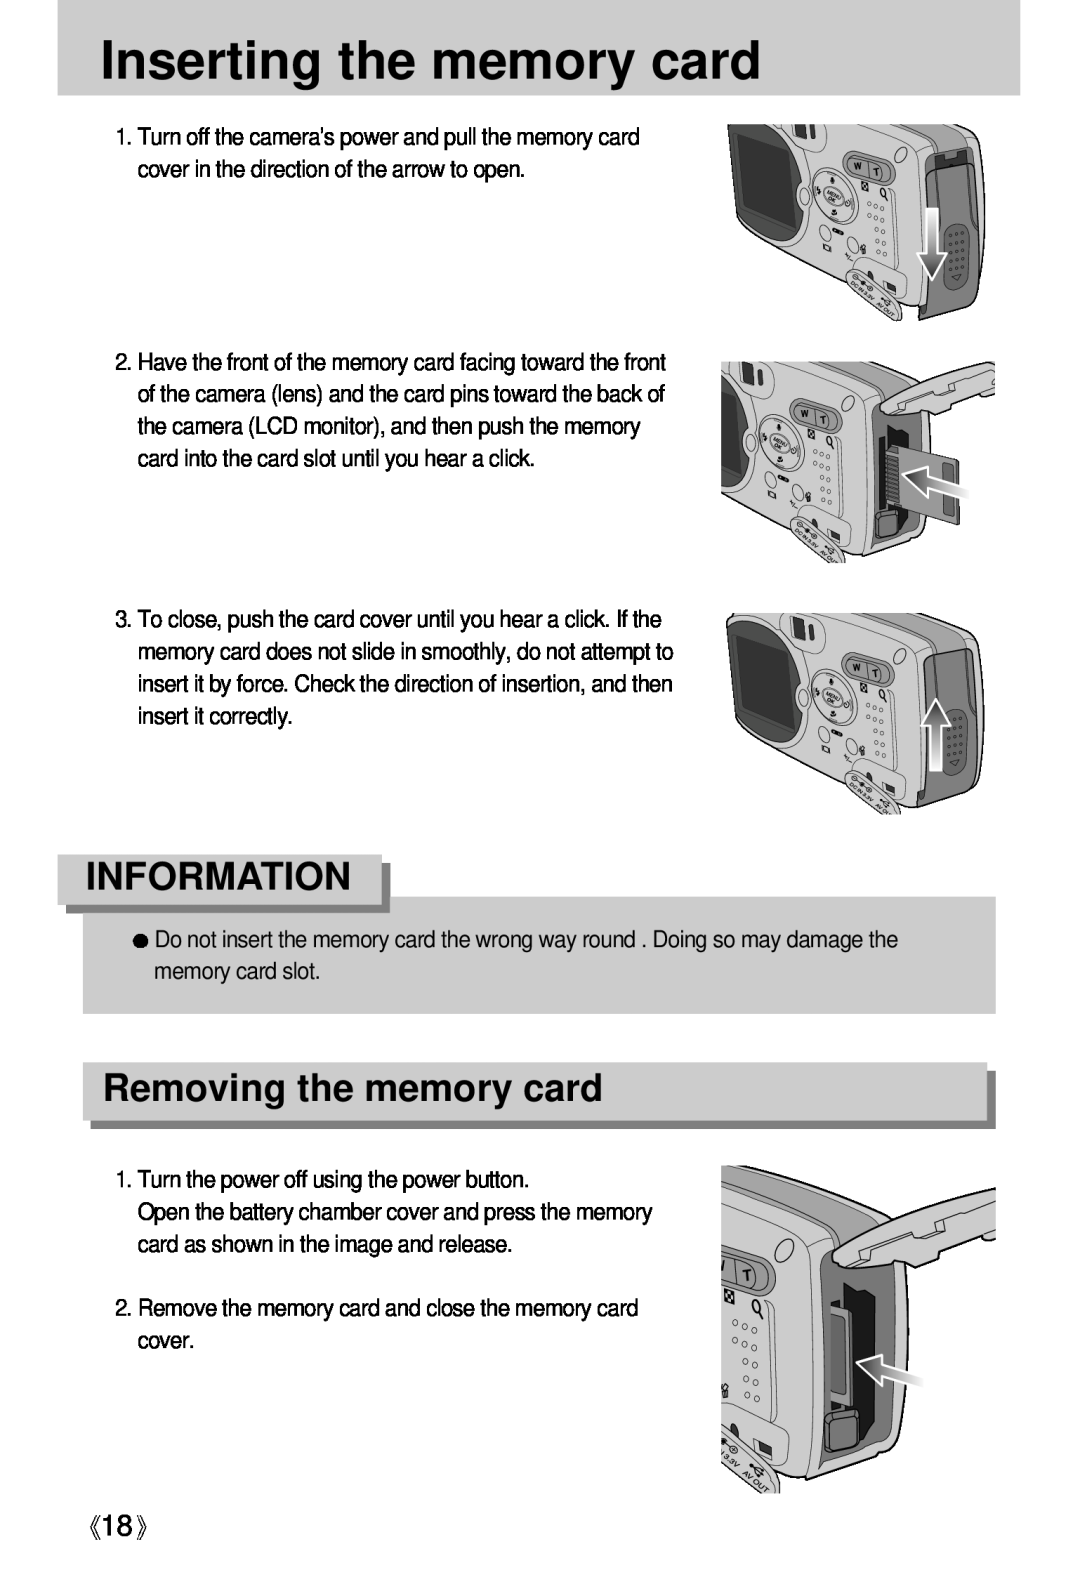 Samsung Digimax U-CA user manual Inserting the memory card, Removing the memory card, Information 